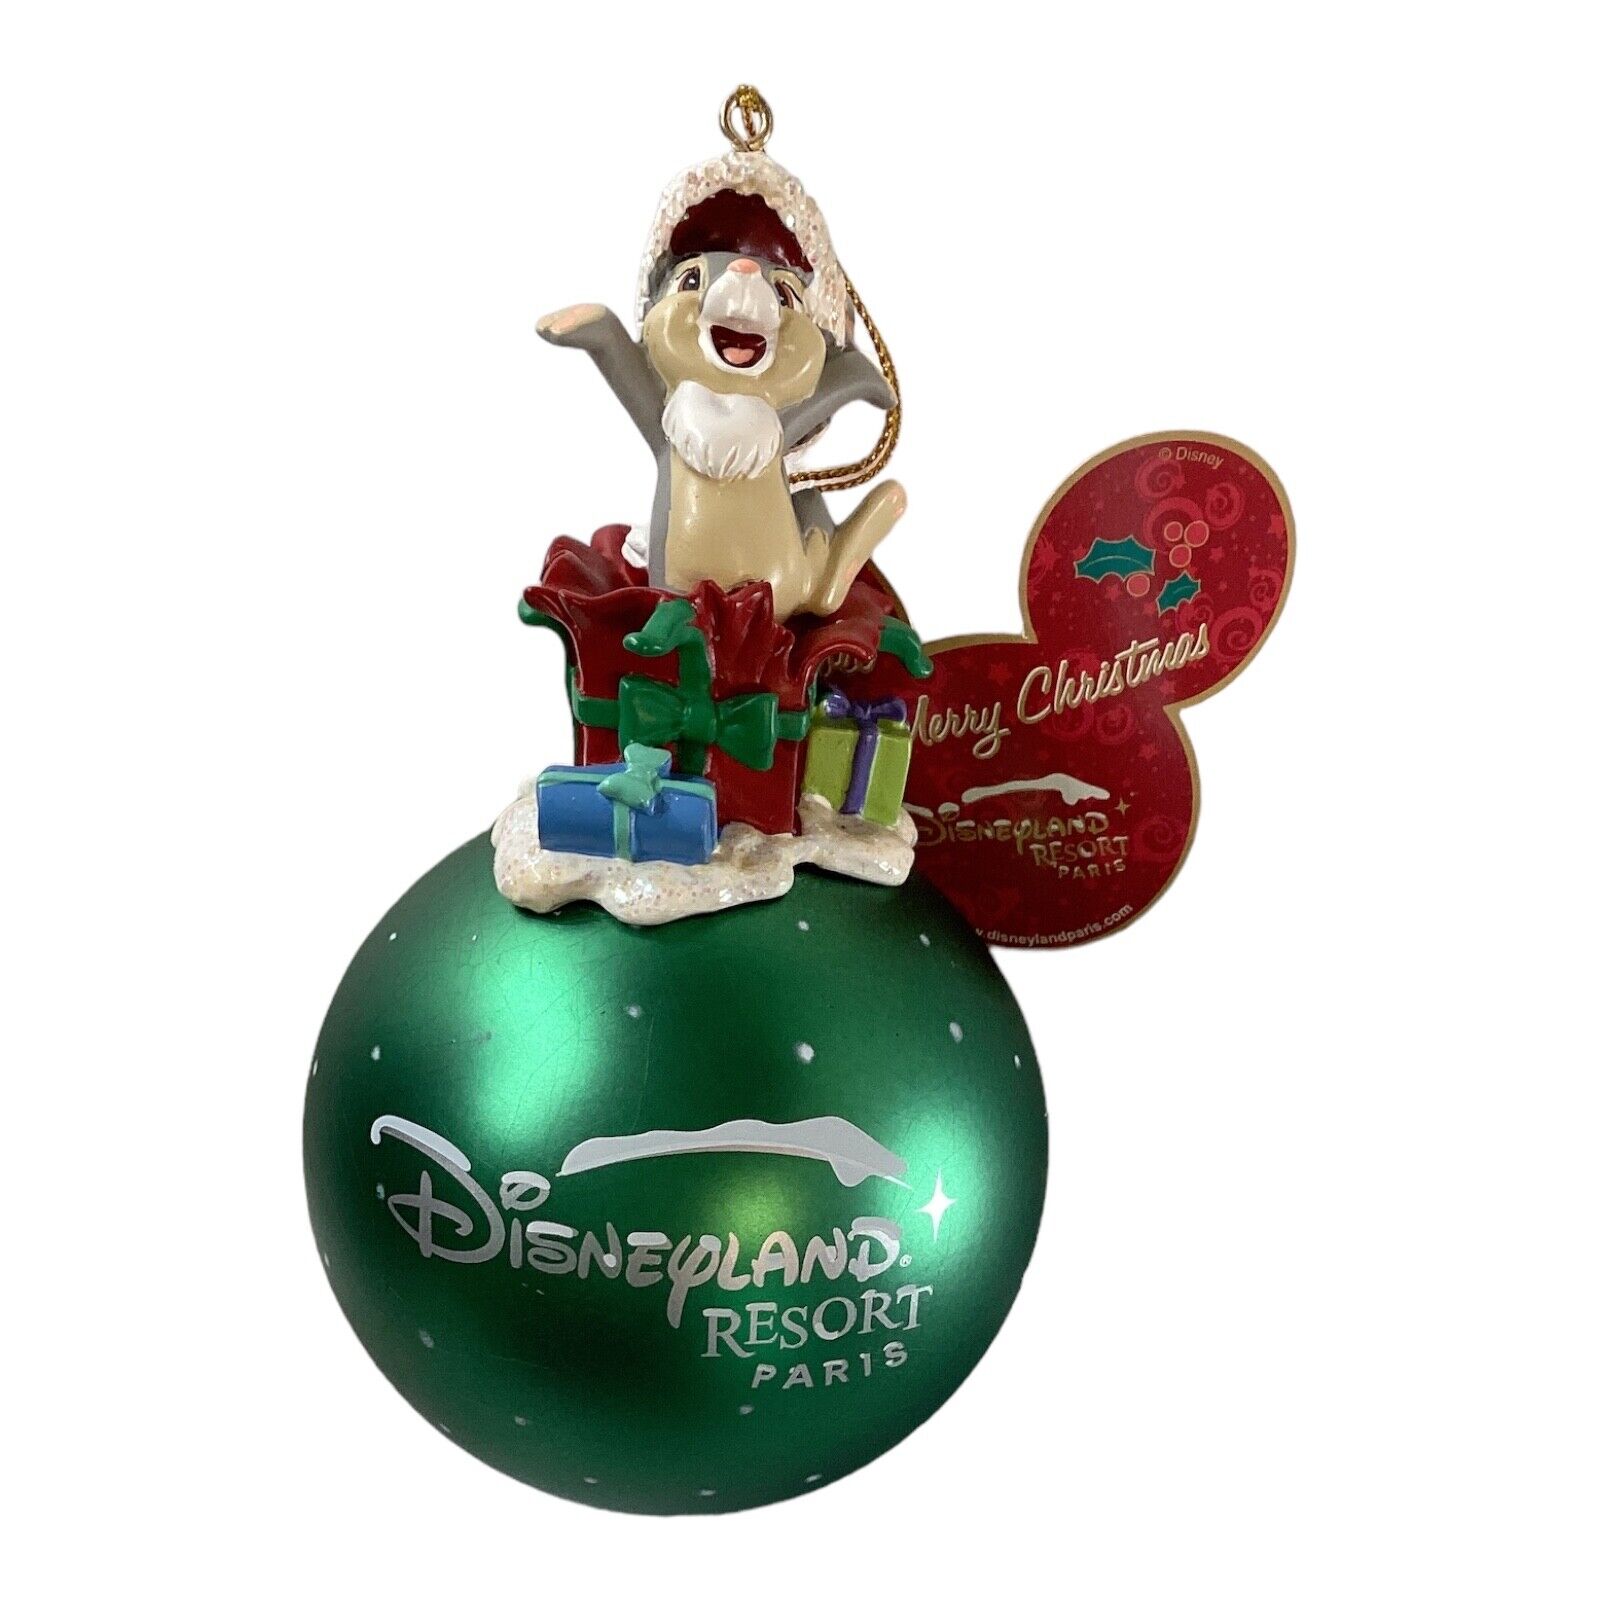 Disneyland Paris 2007 green plastic Christmas ornament with Thumper 5”